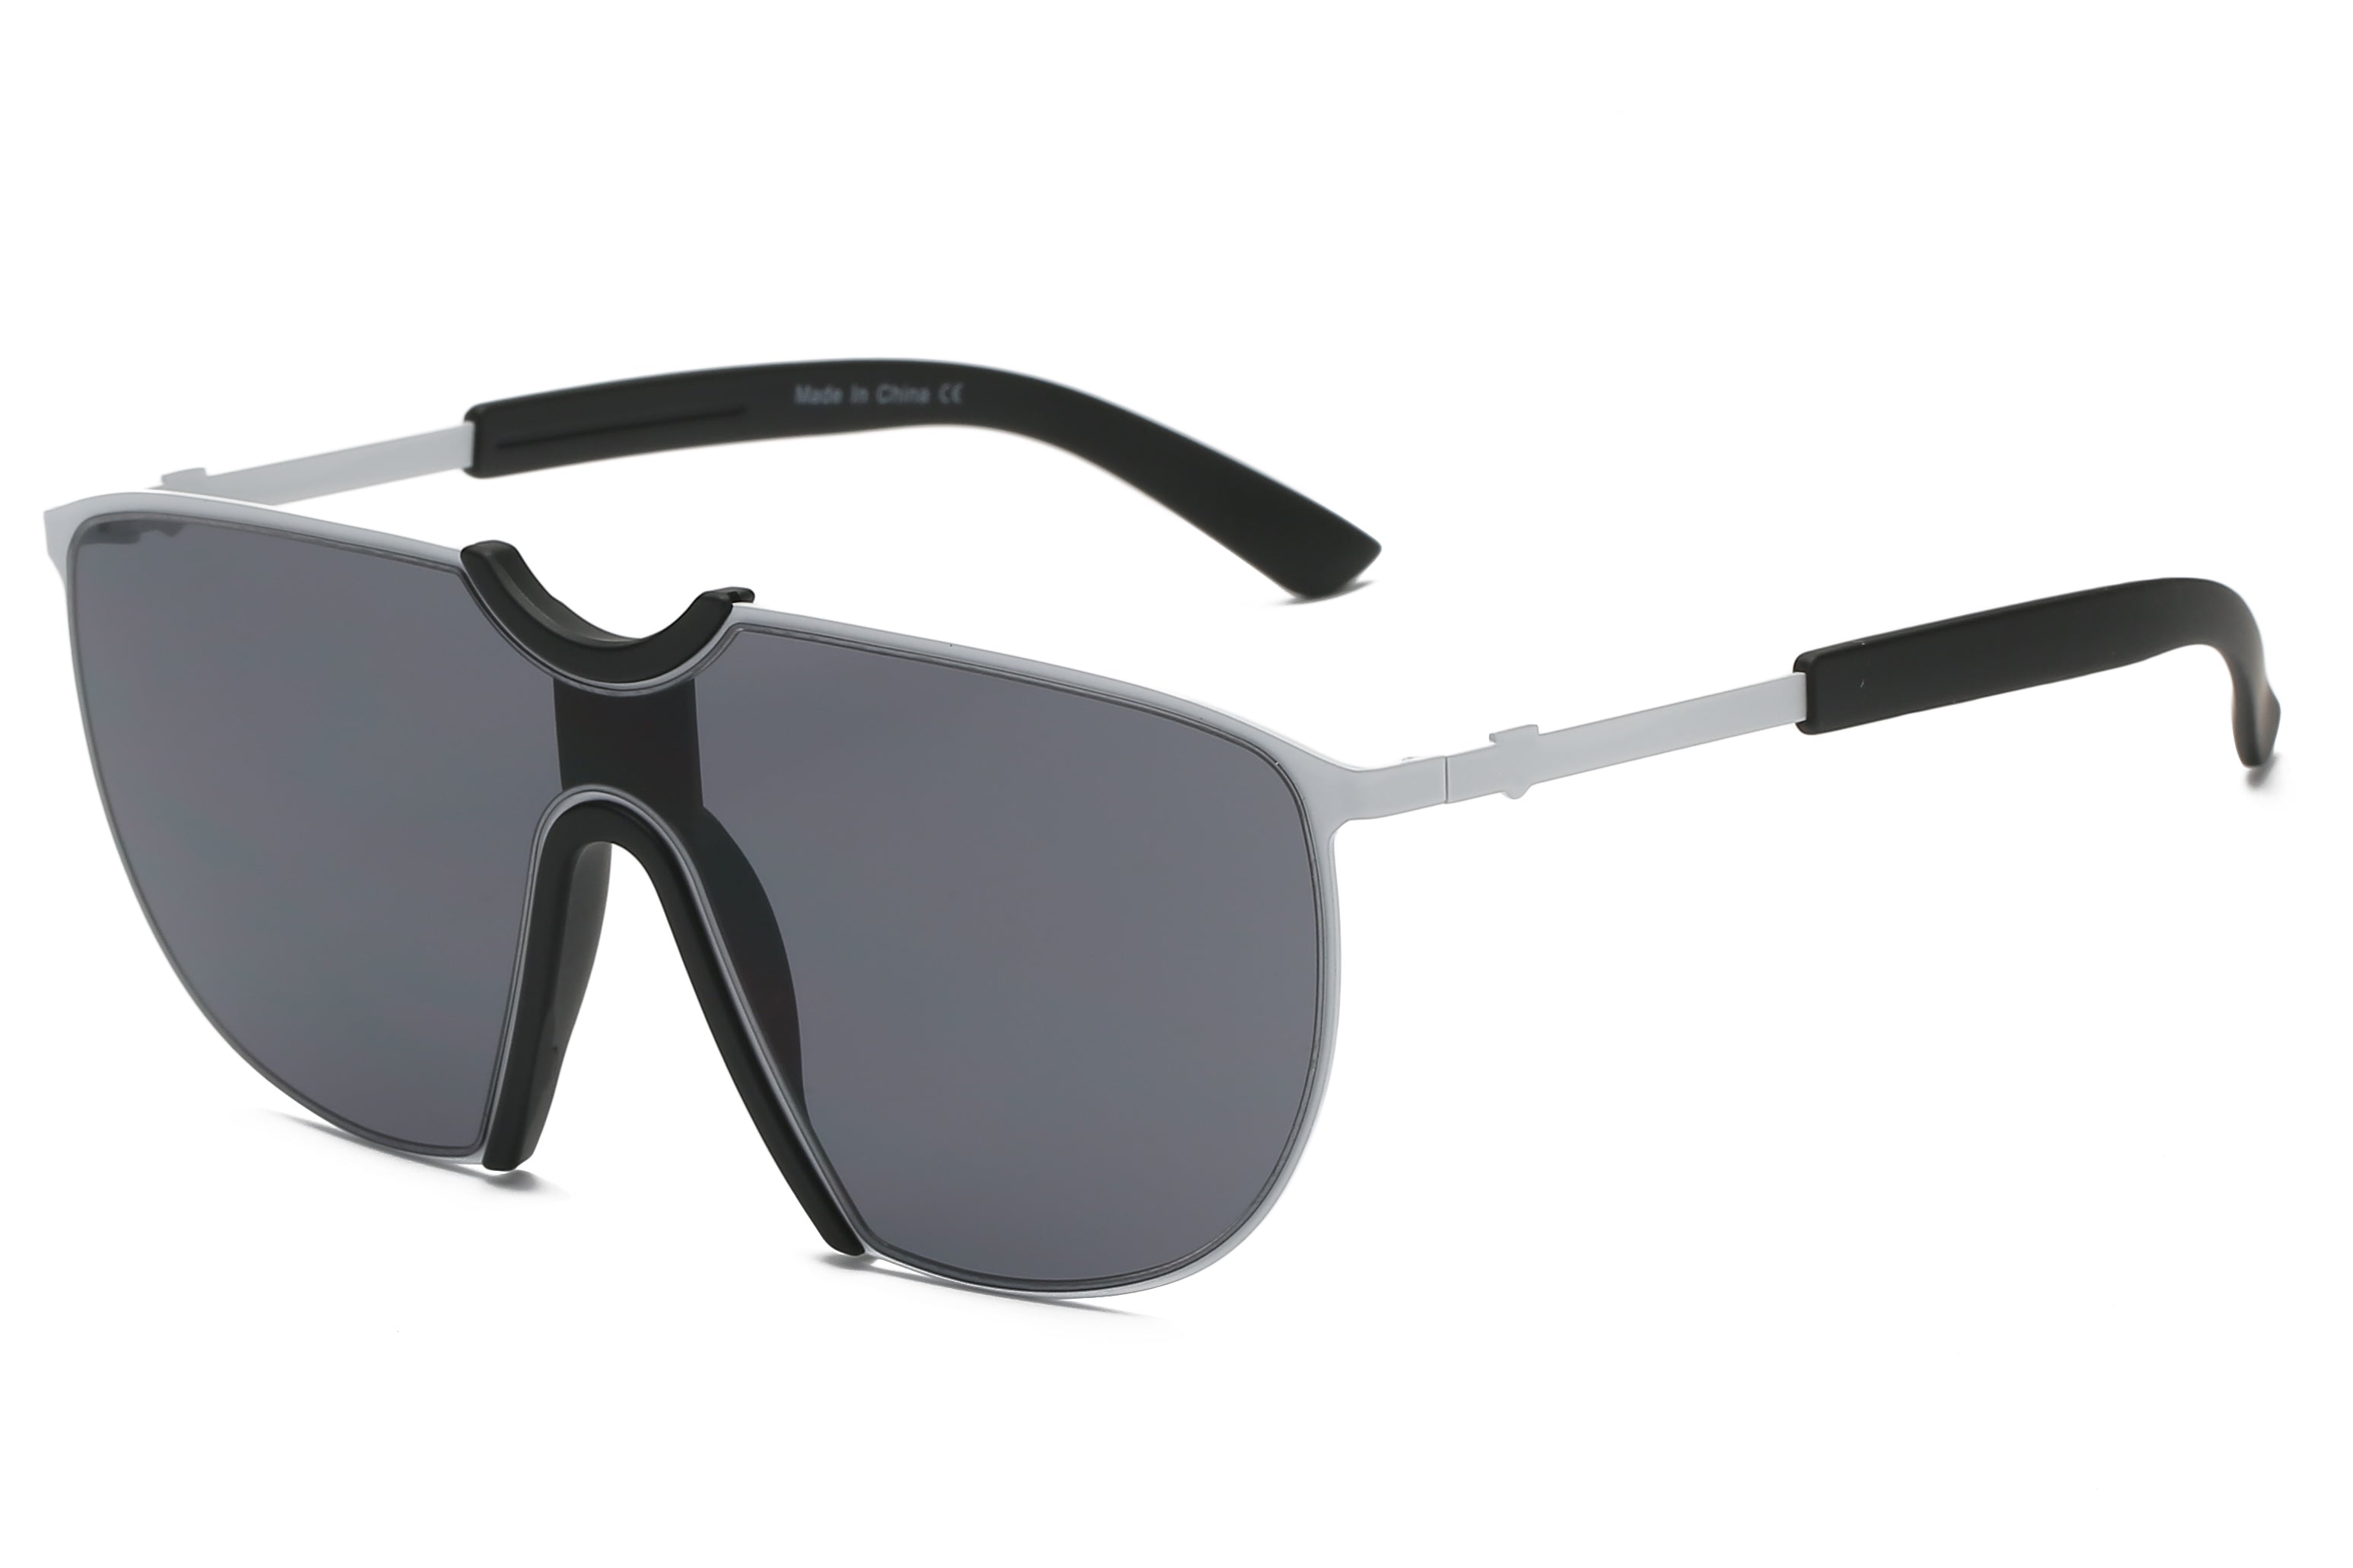 S3003 - Large Oversize Aviator Sunglasses Silver/Smoke